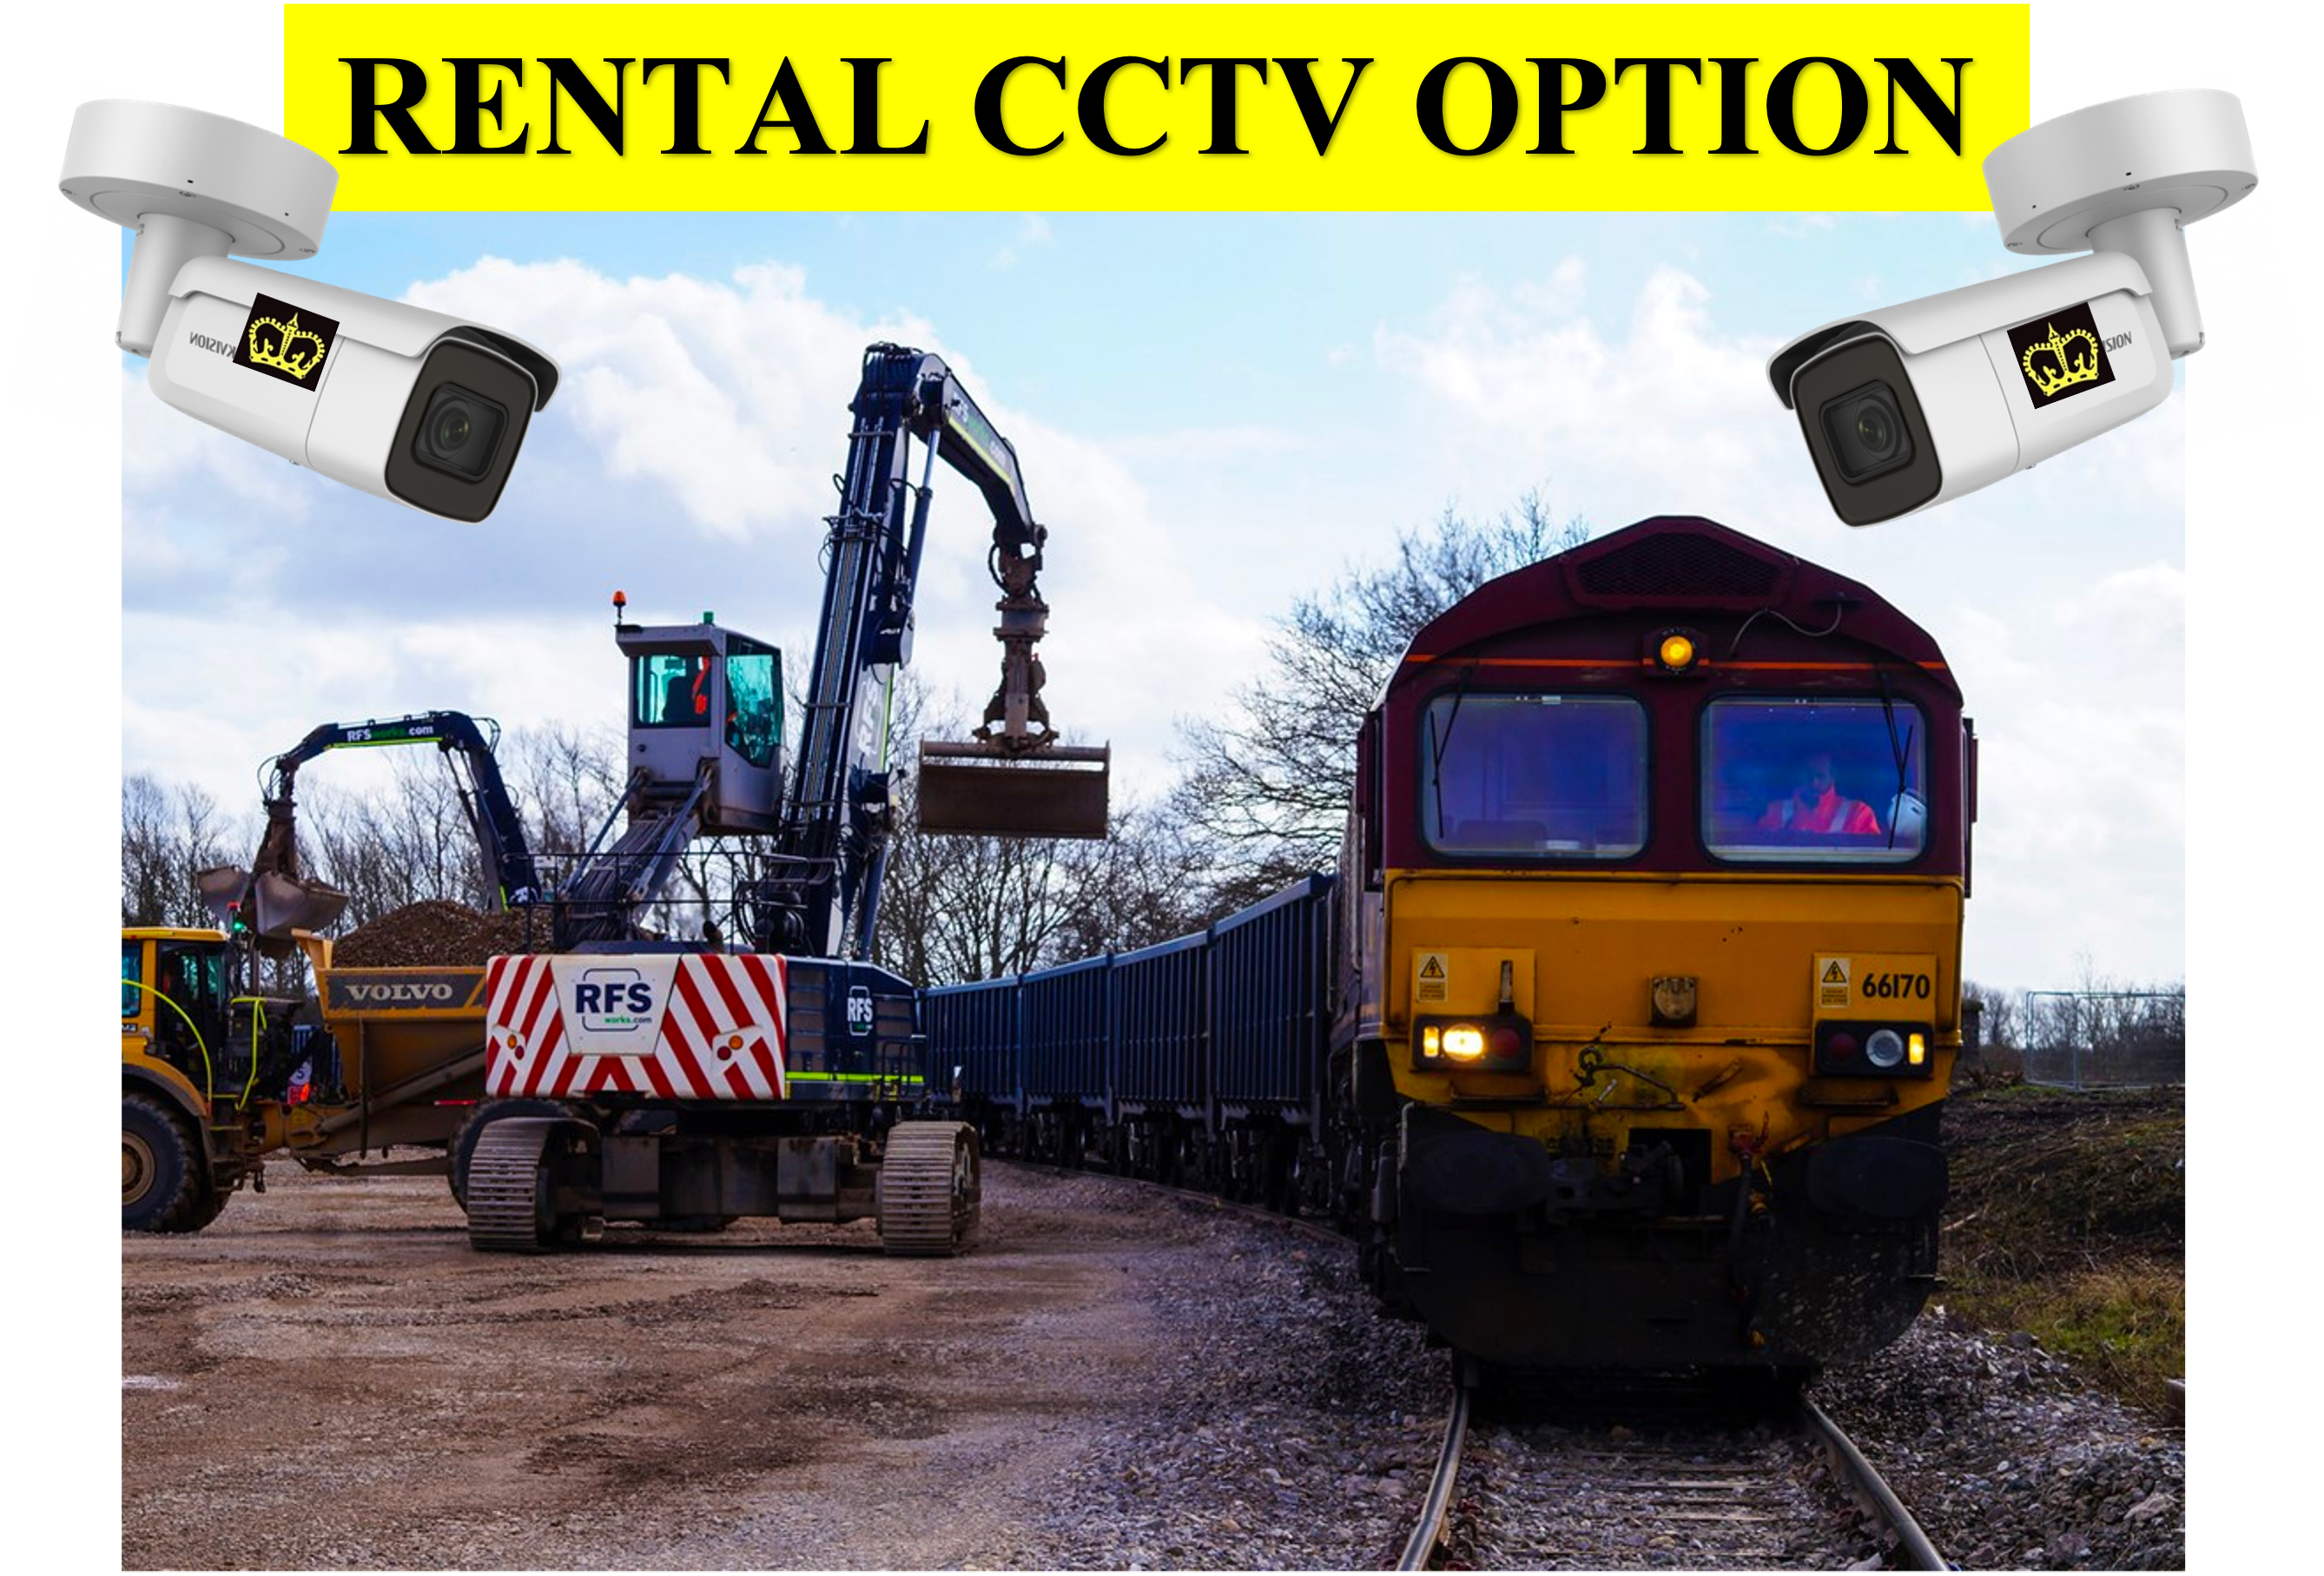 Railway CCTV